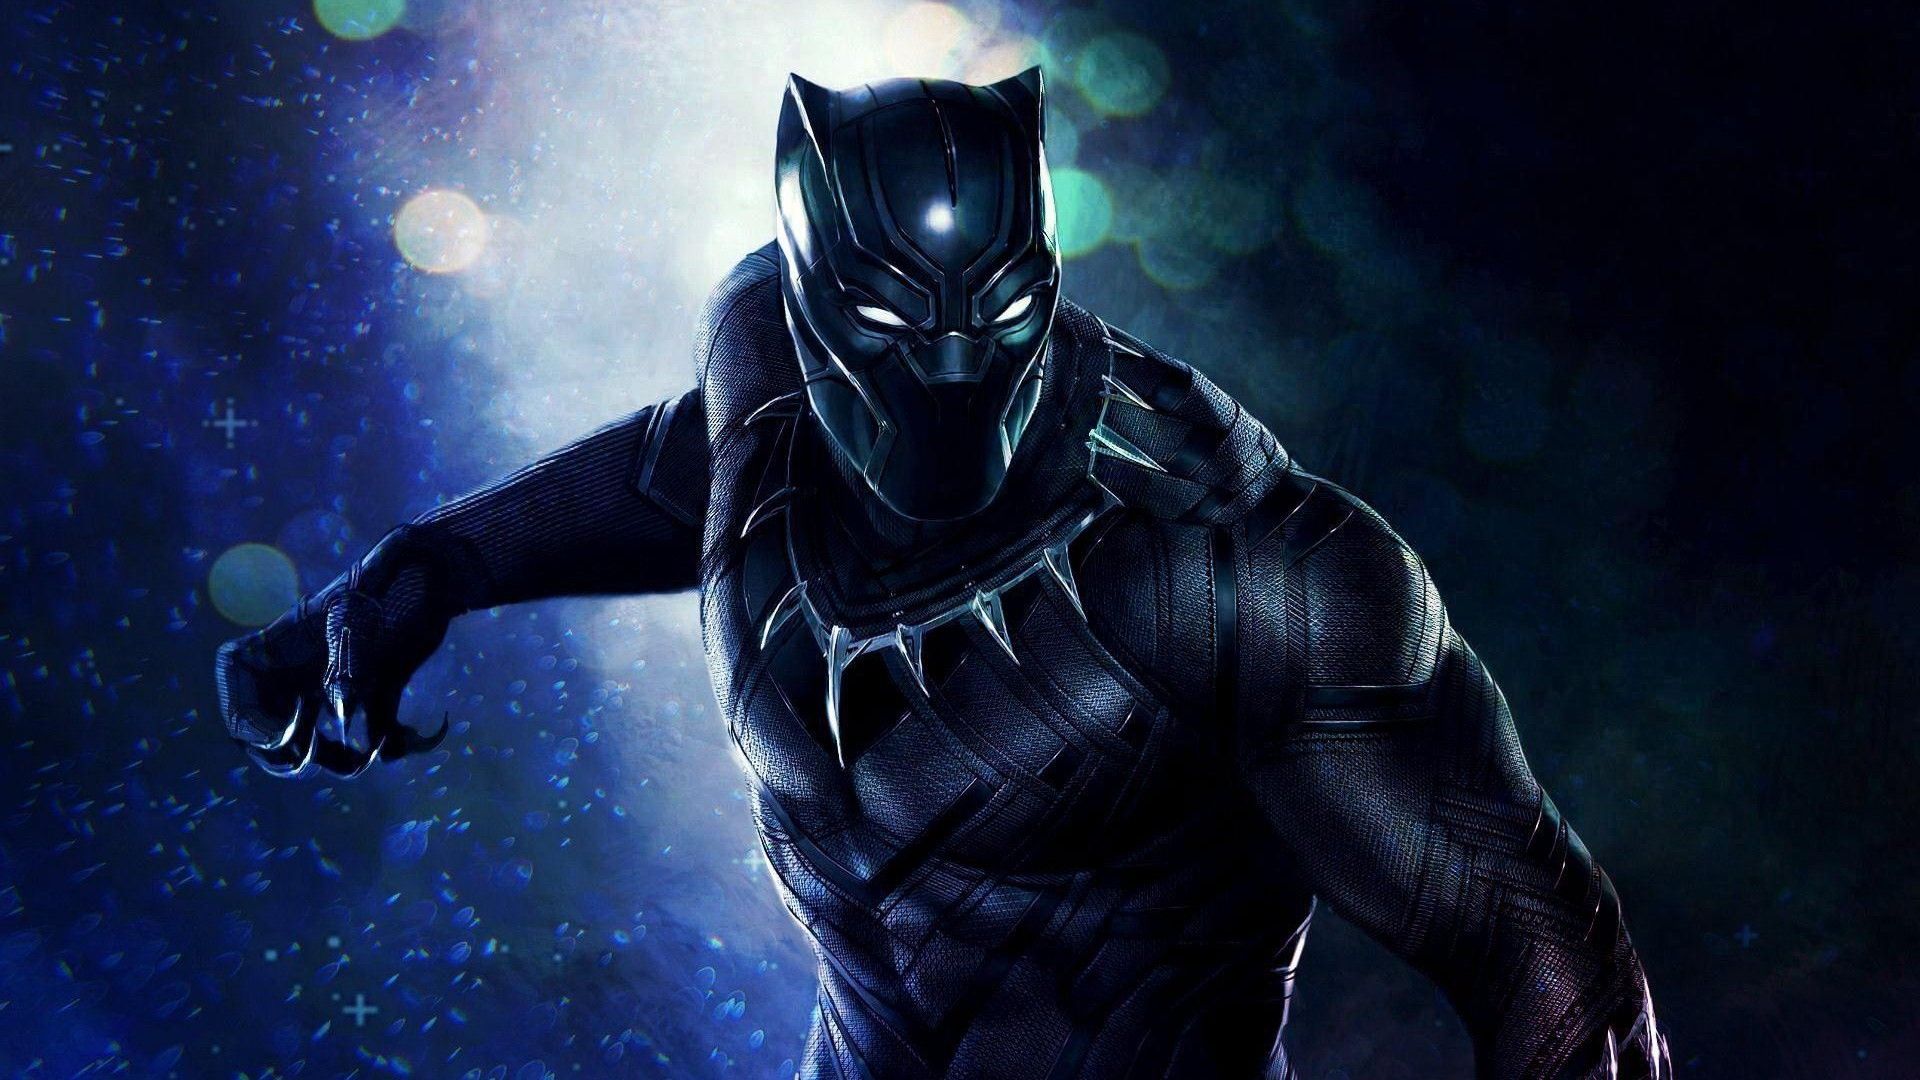 Black Panther Superhero Wallpaper For Desktop Movie Poster Wallpaper HD